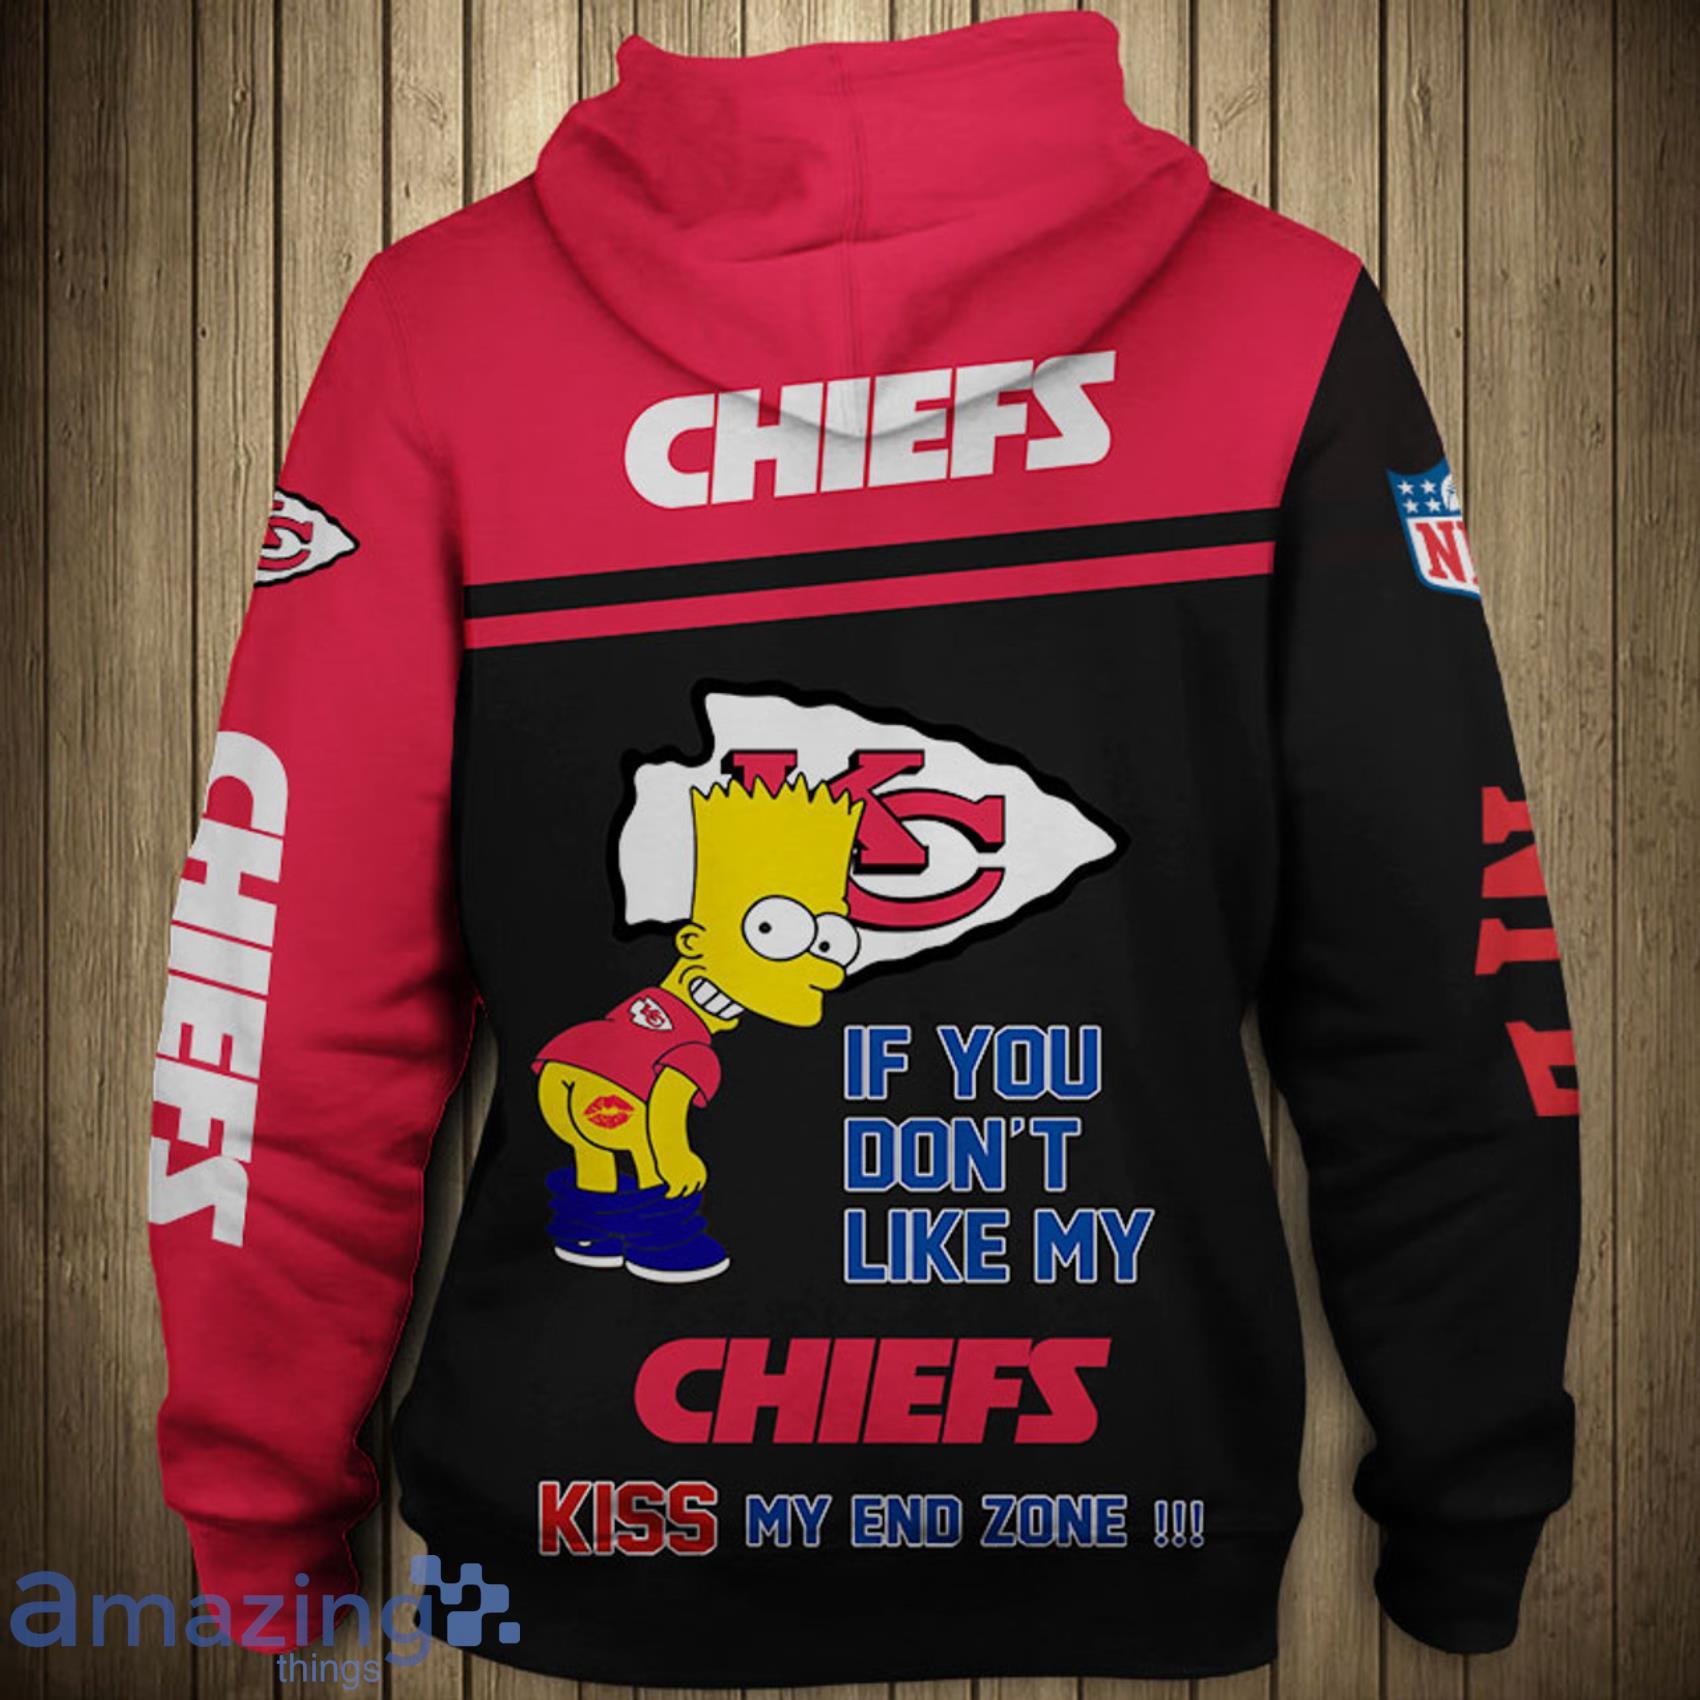 kansas city chiefs hoodies on sale